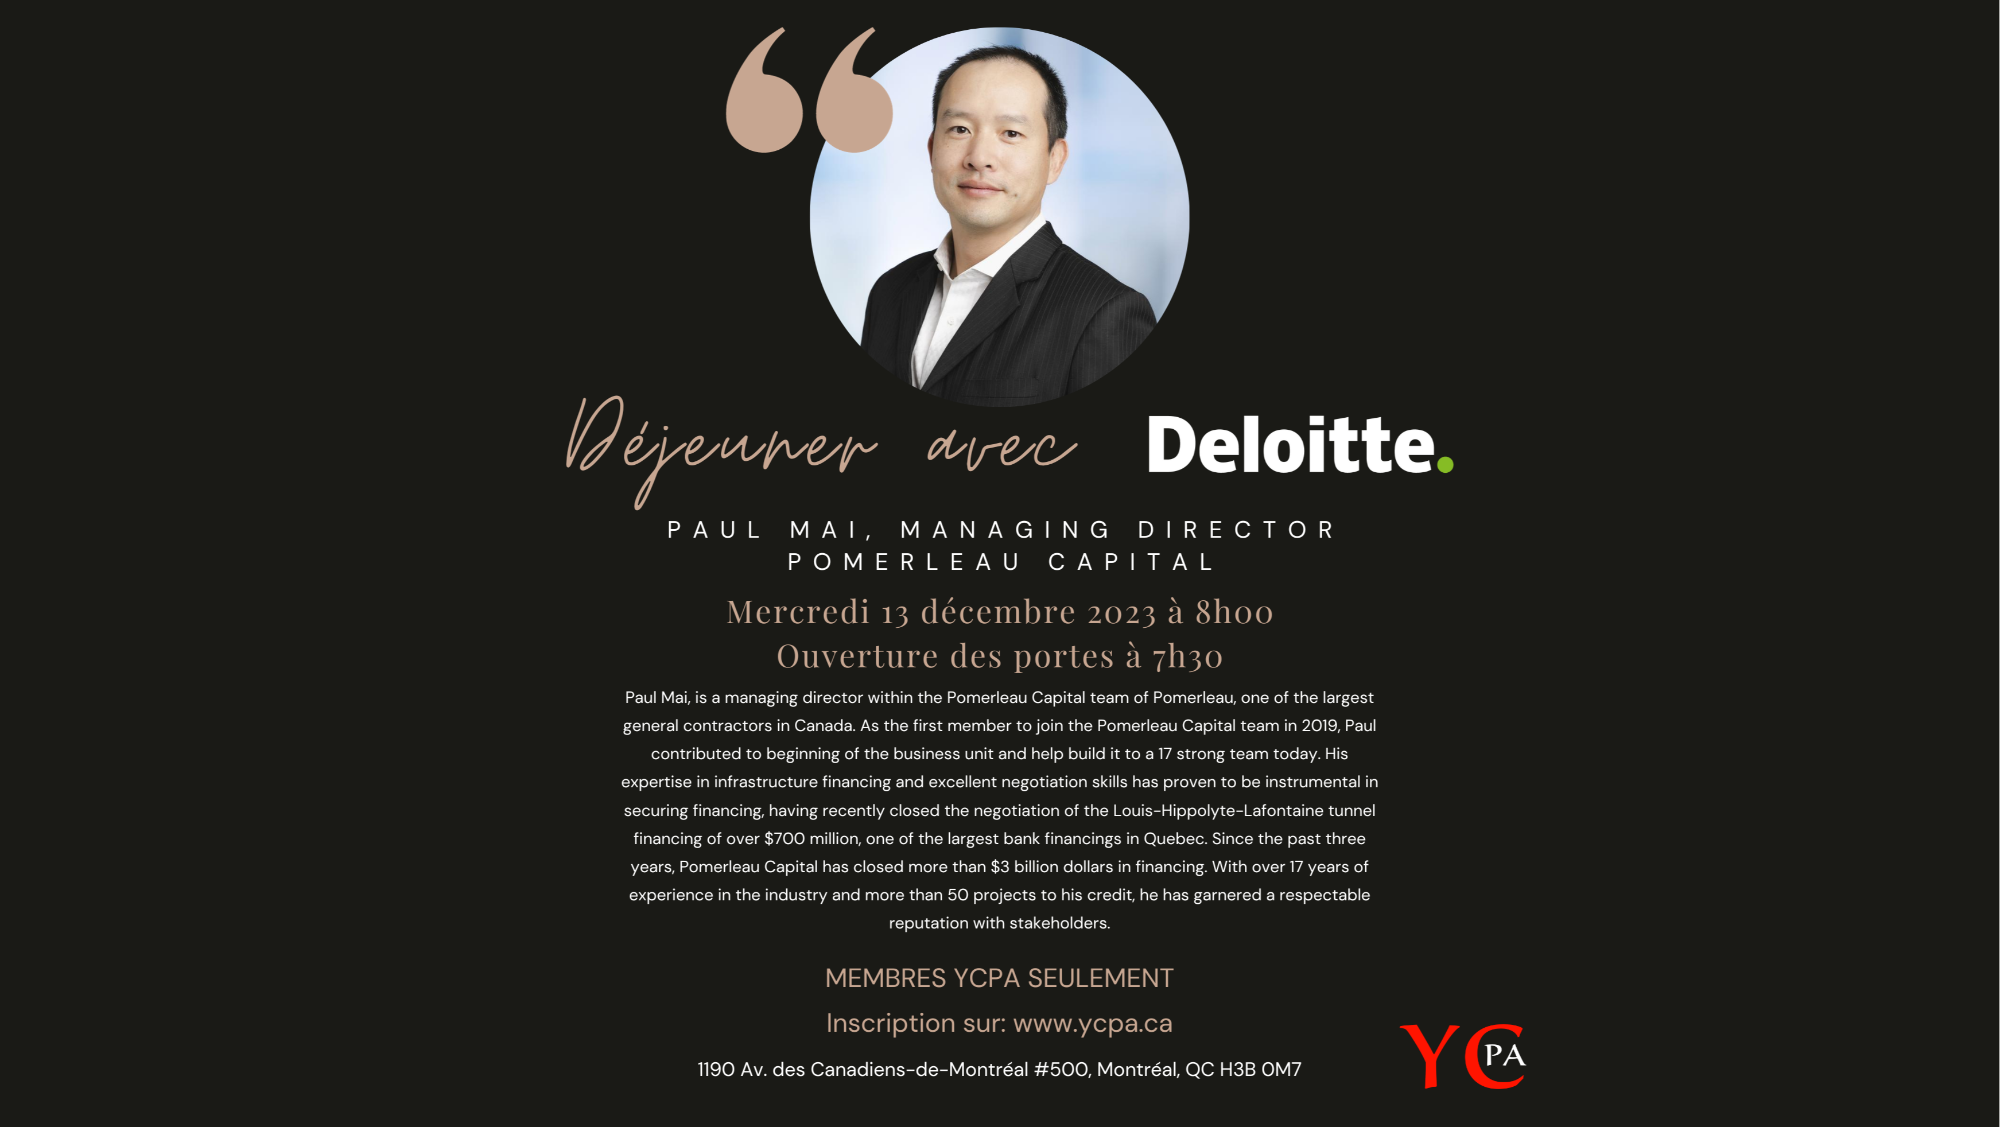 Déjeuner avec Deloitte - Paul Mai, Managing Director at Pomerleau Capital